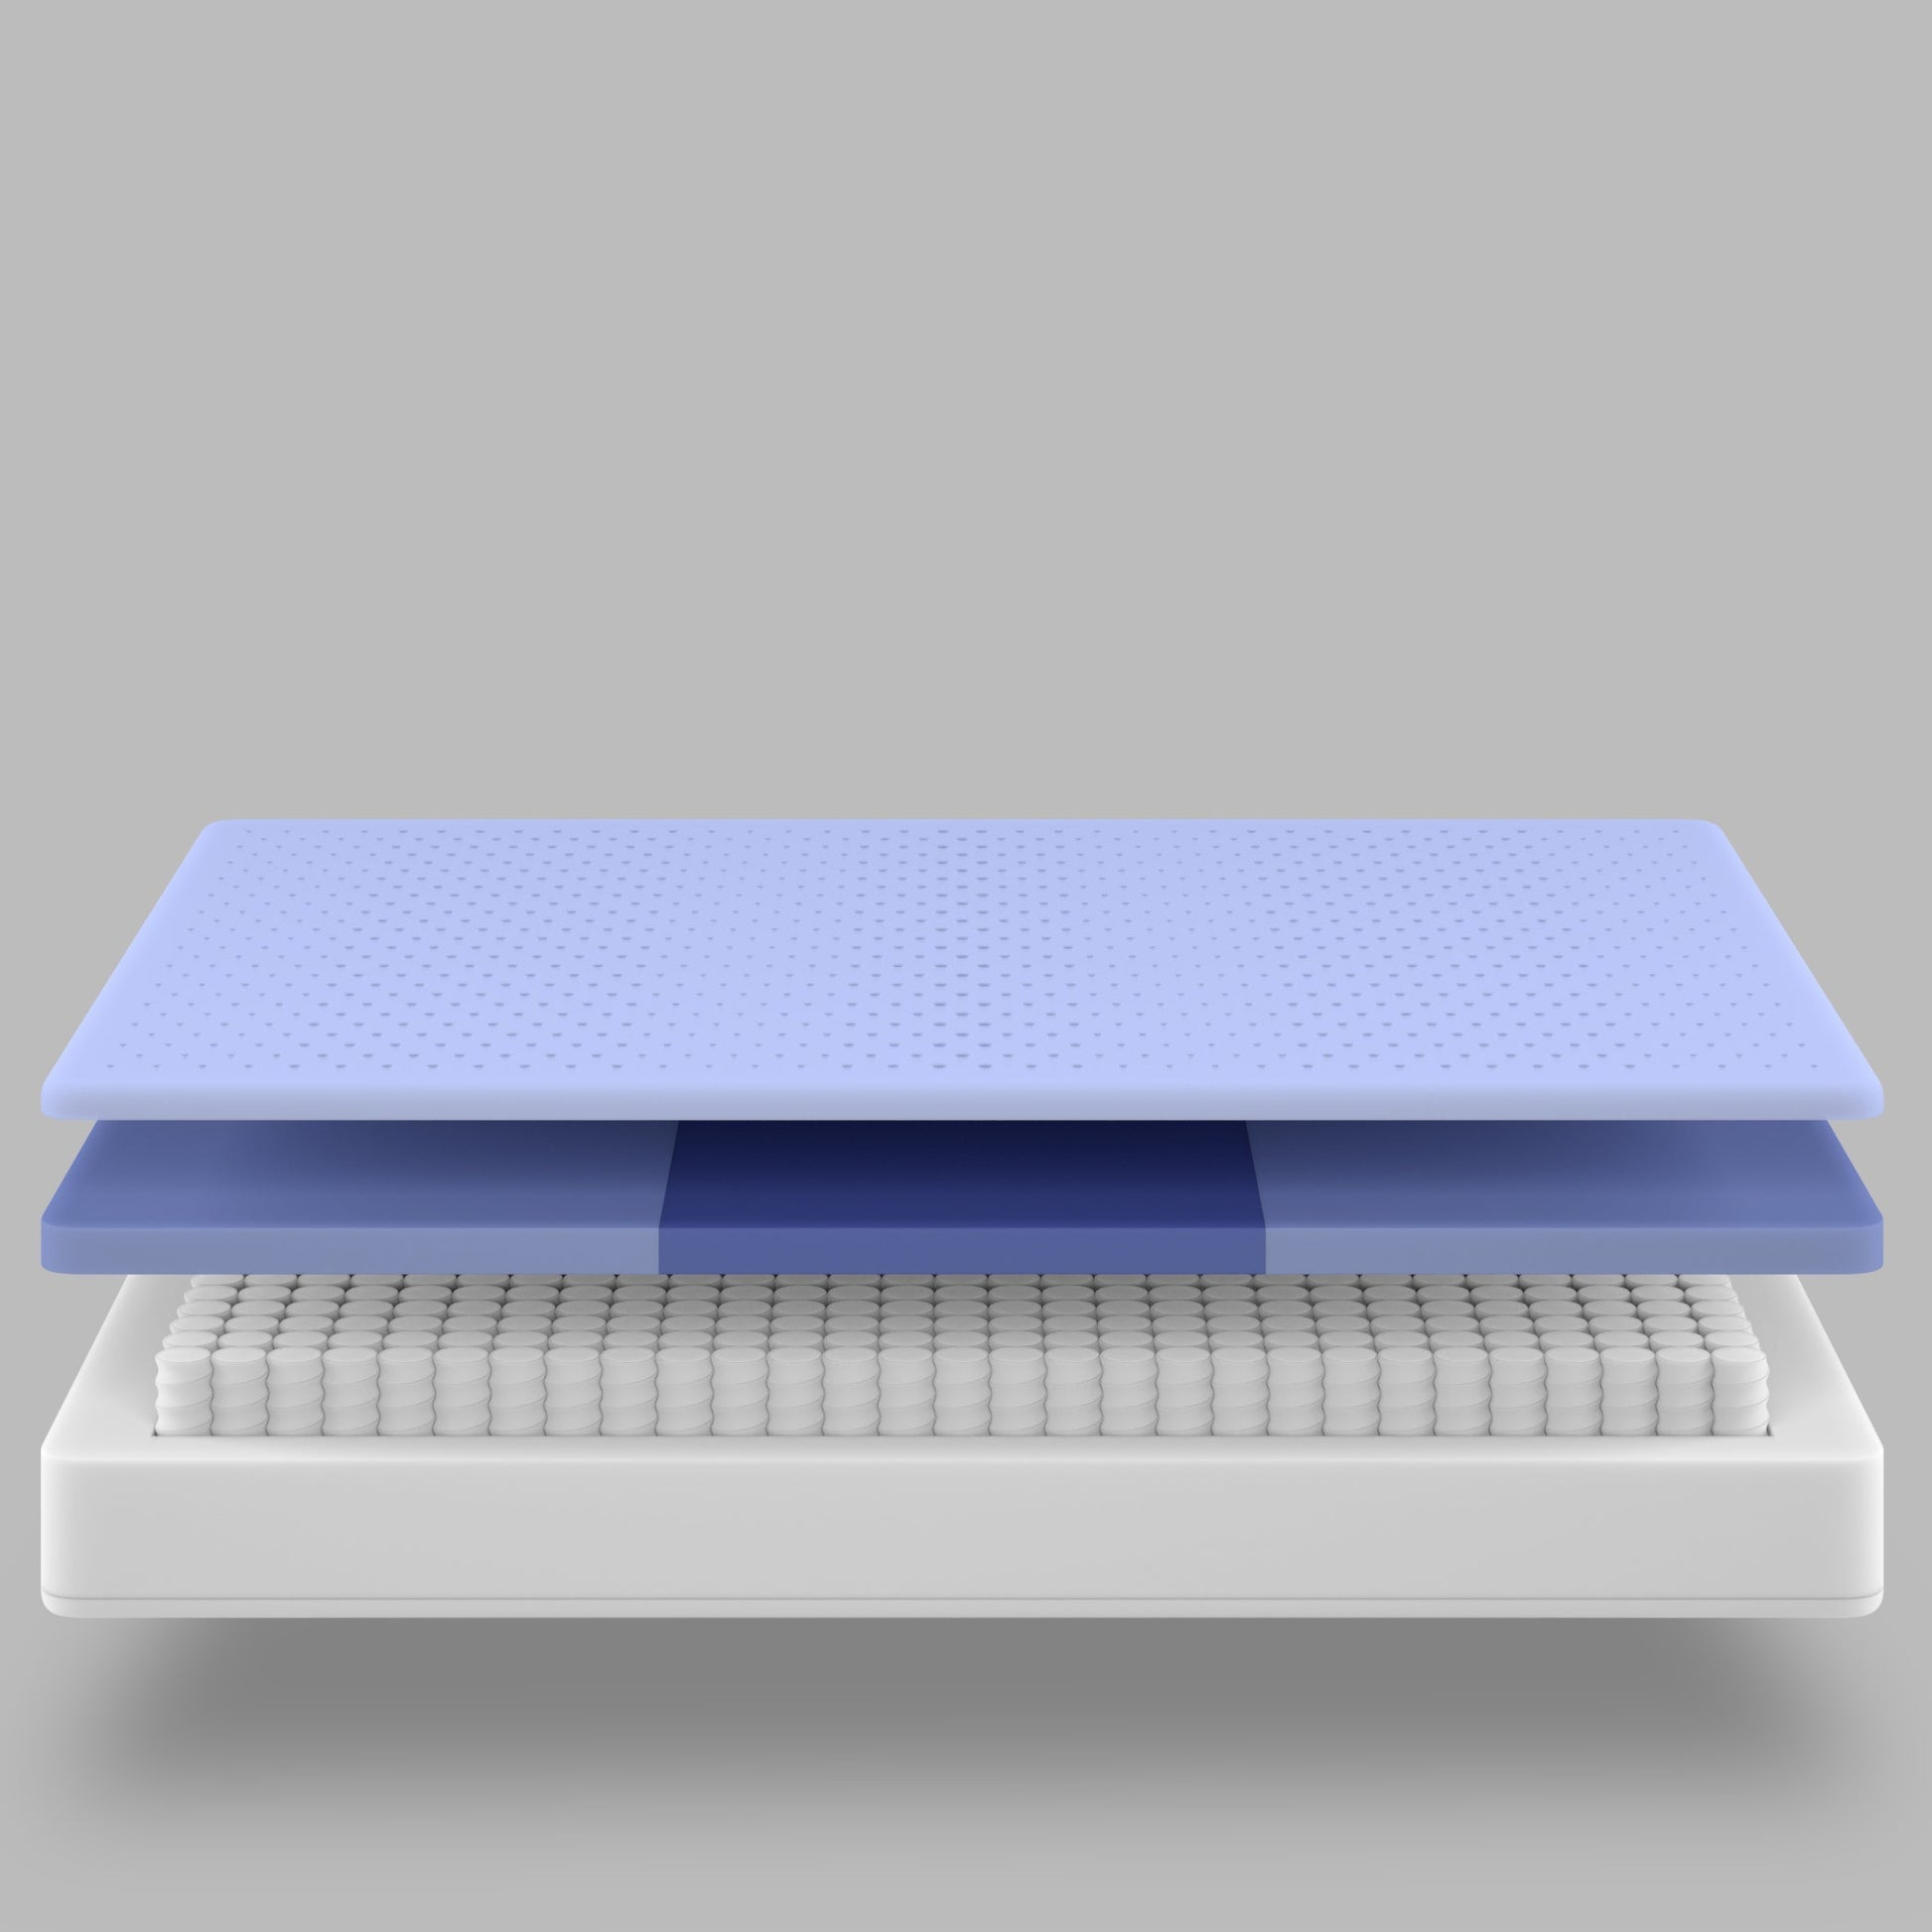 Casper Original Hybrid Mattress Foam Layer Cutaway